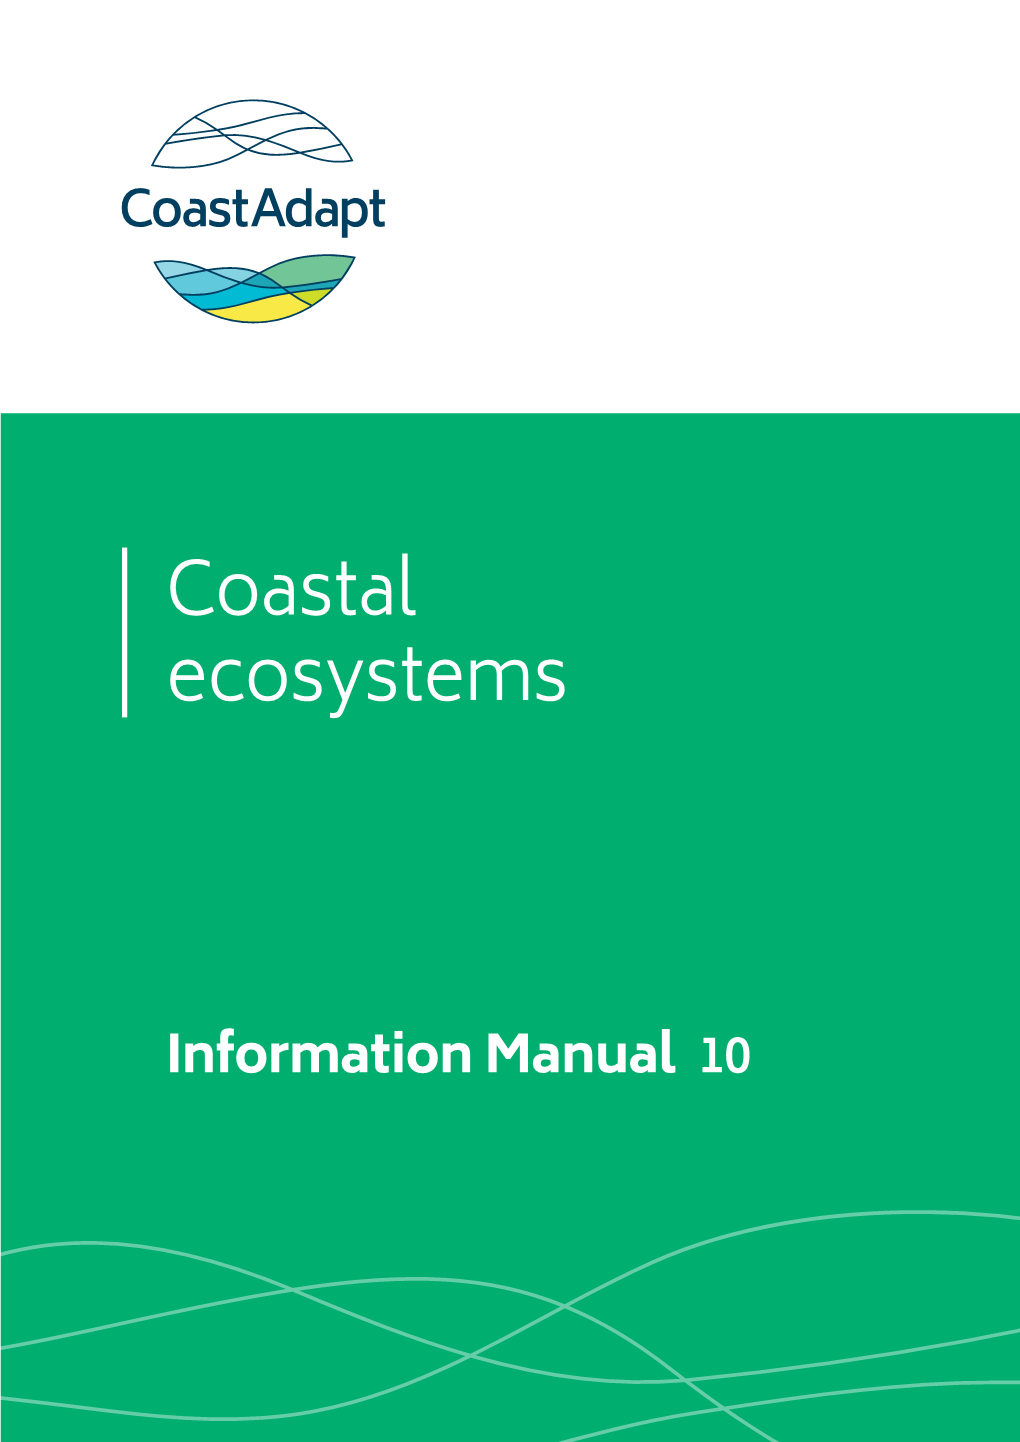 Information Manual on Coastal Ecosystems